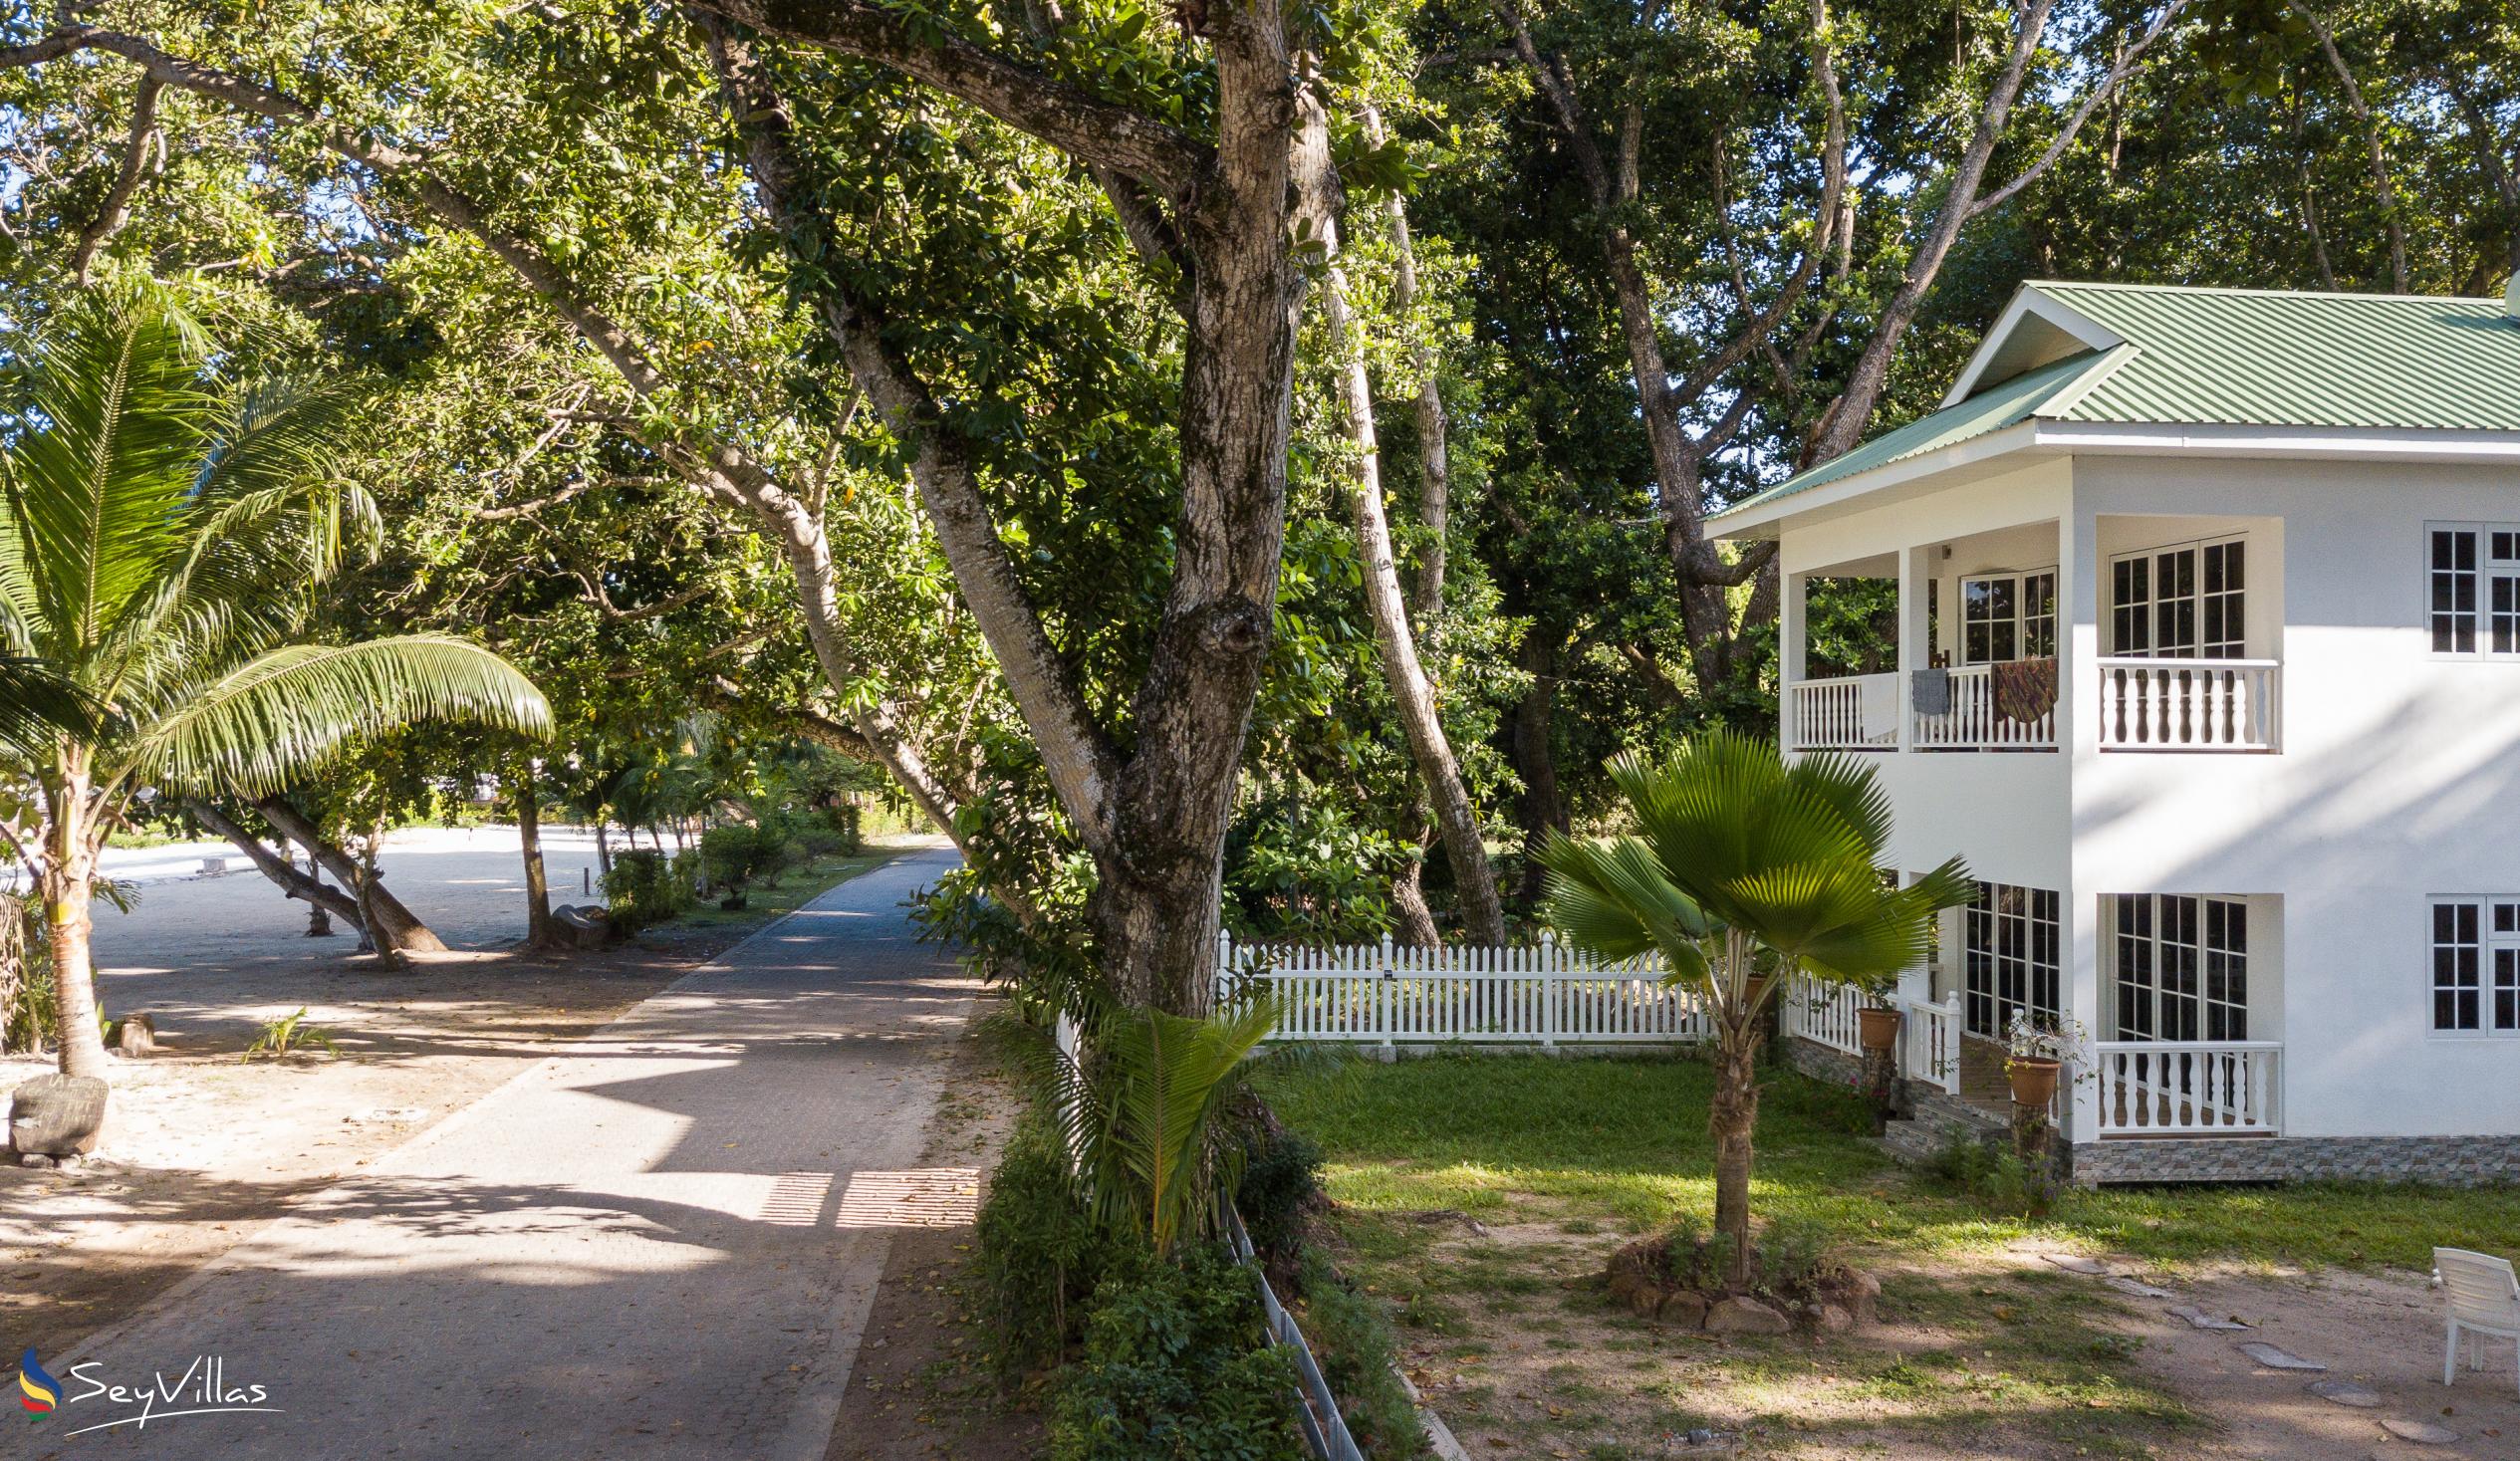 Photo 6: Villa Charette - Outdoor area - La Digue (Seychelles)